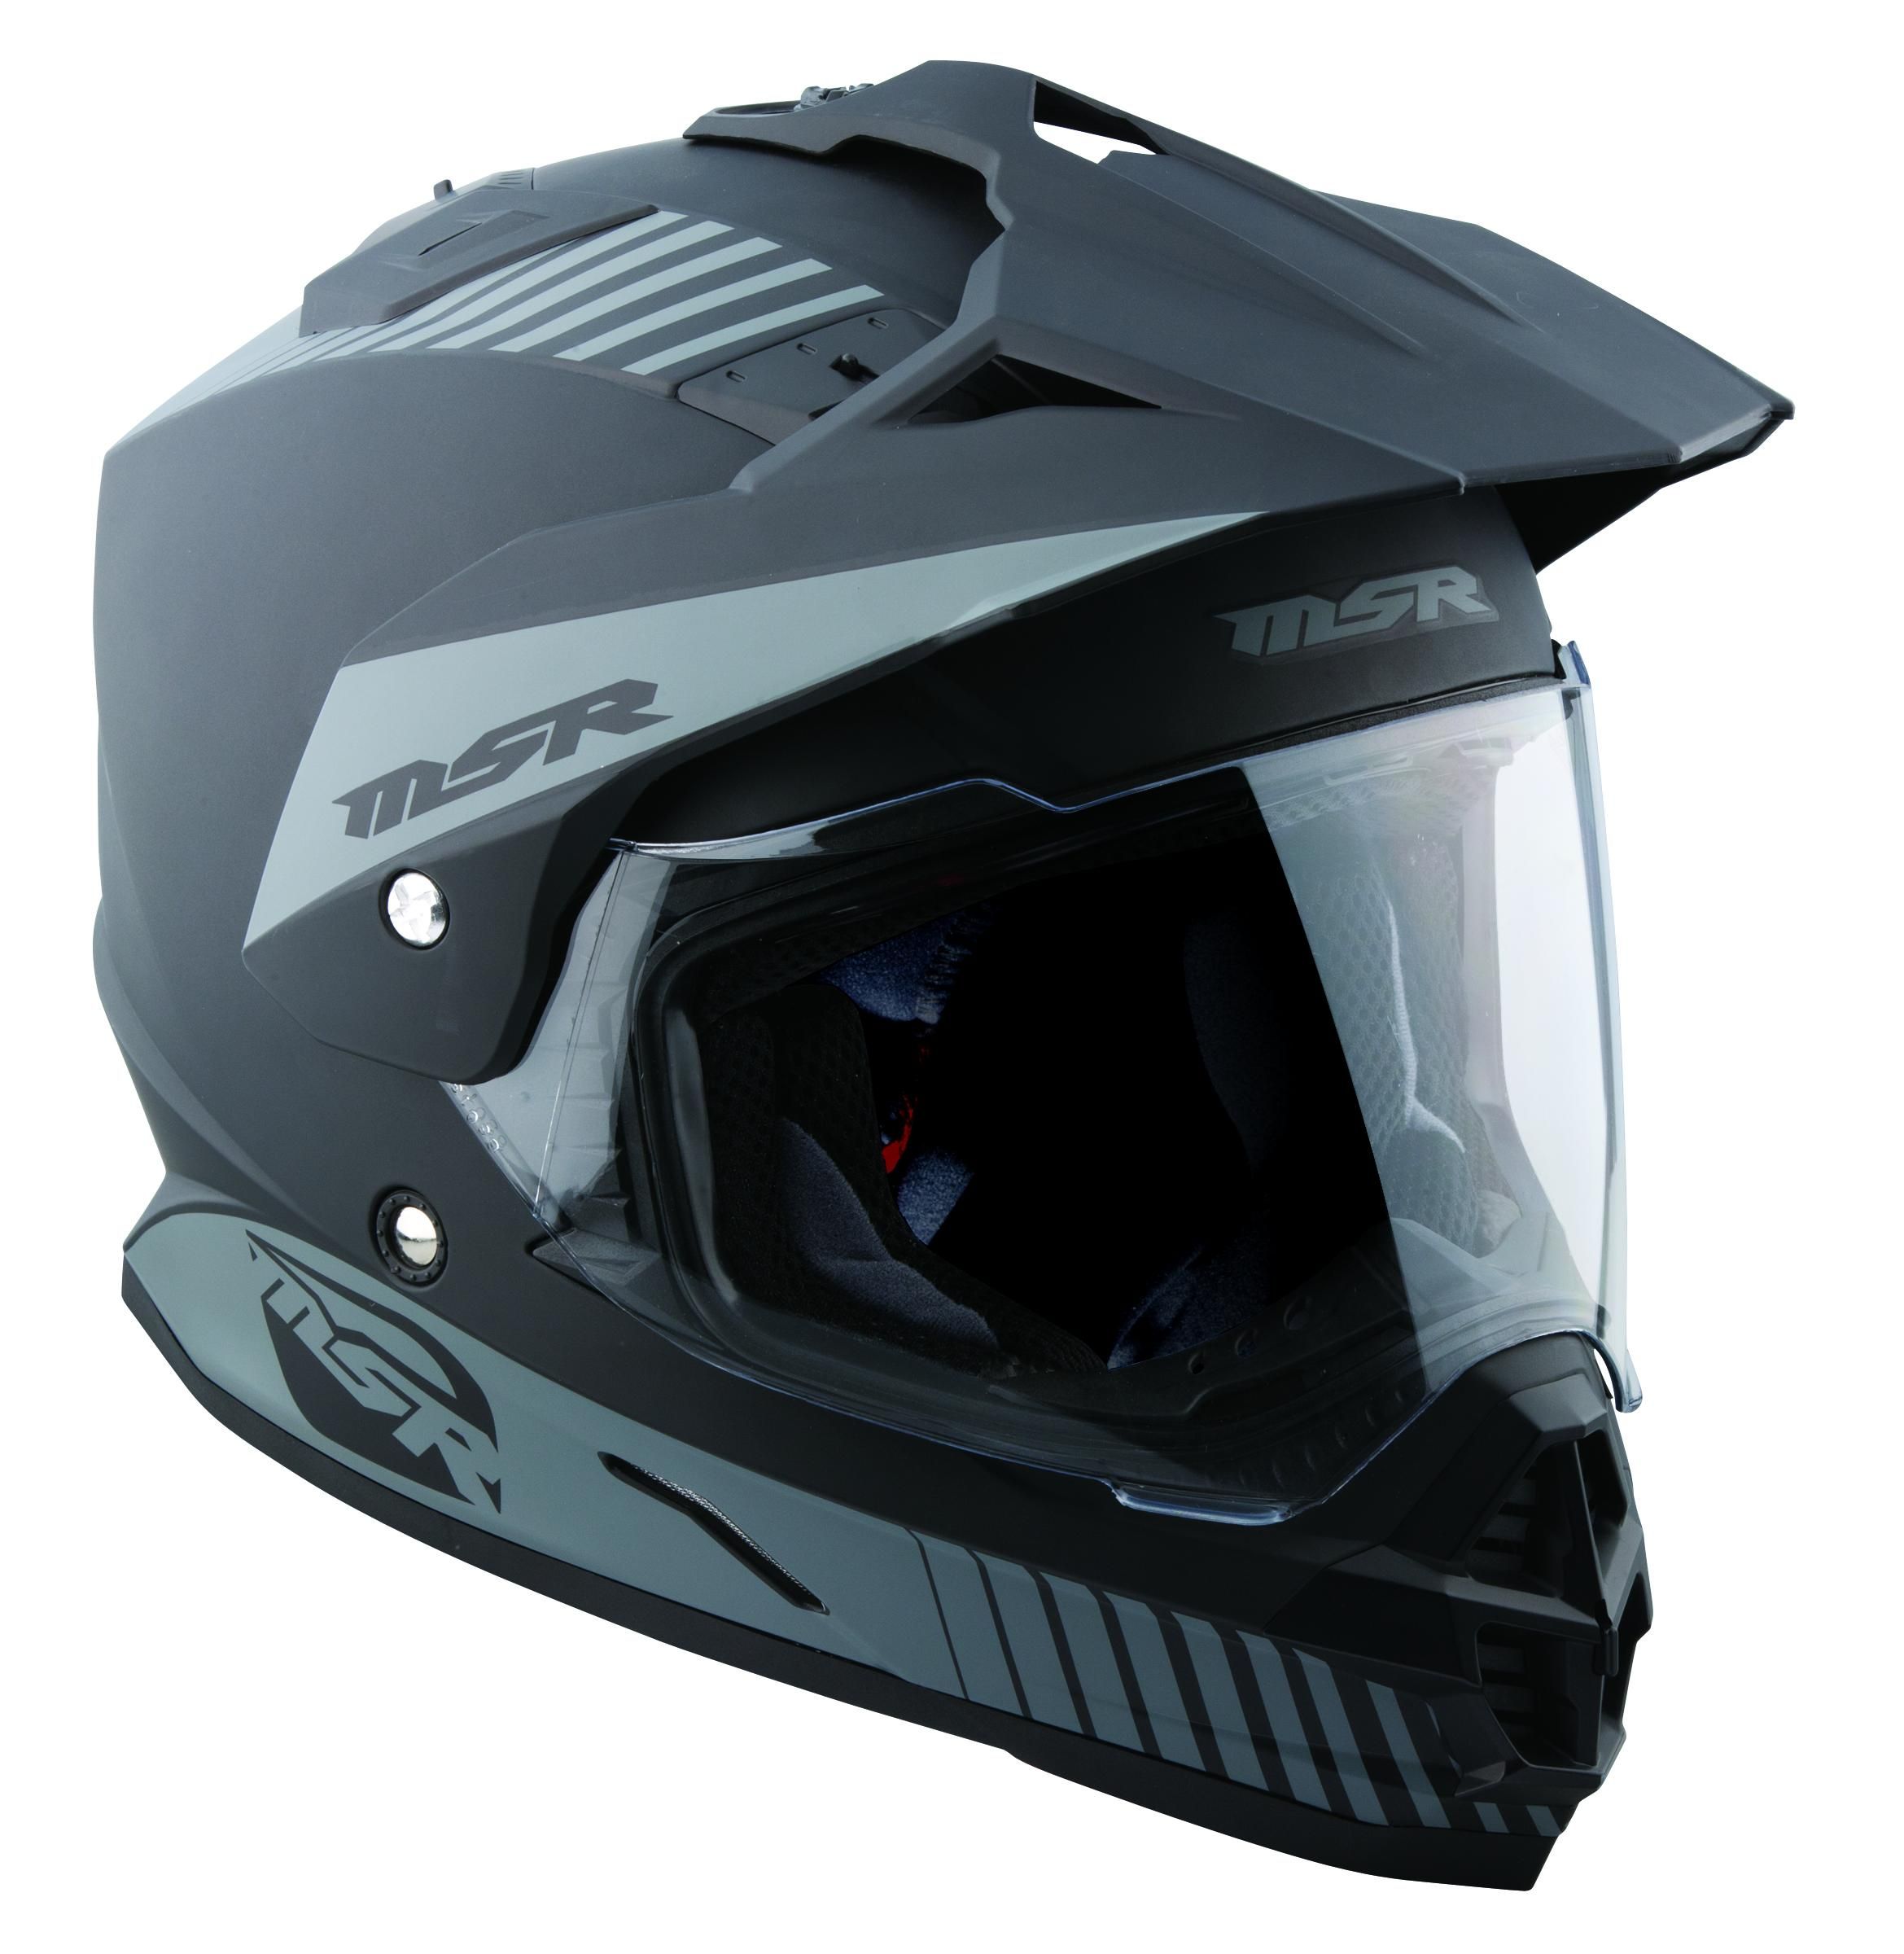 45XC-MSR-359200 Helmet Liner for M13 Xpedition Helmet - 2XL